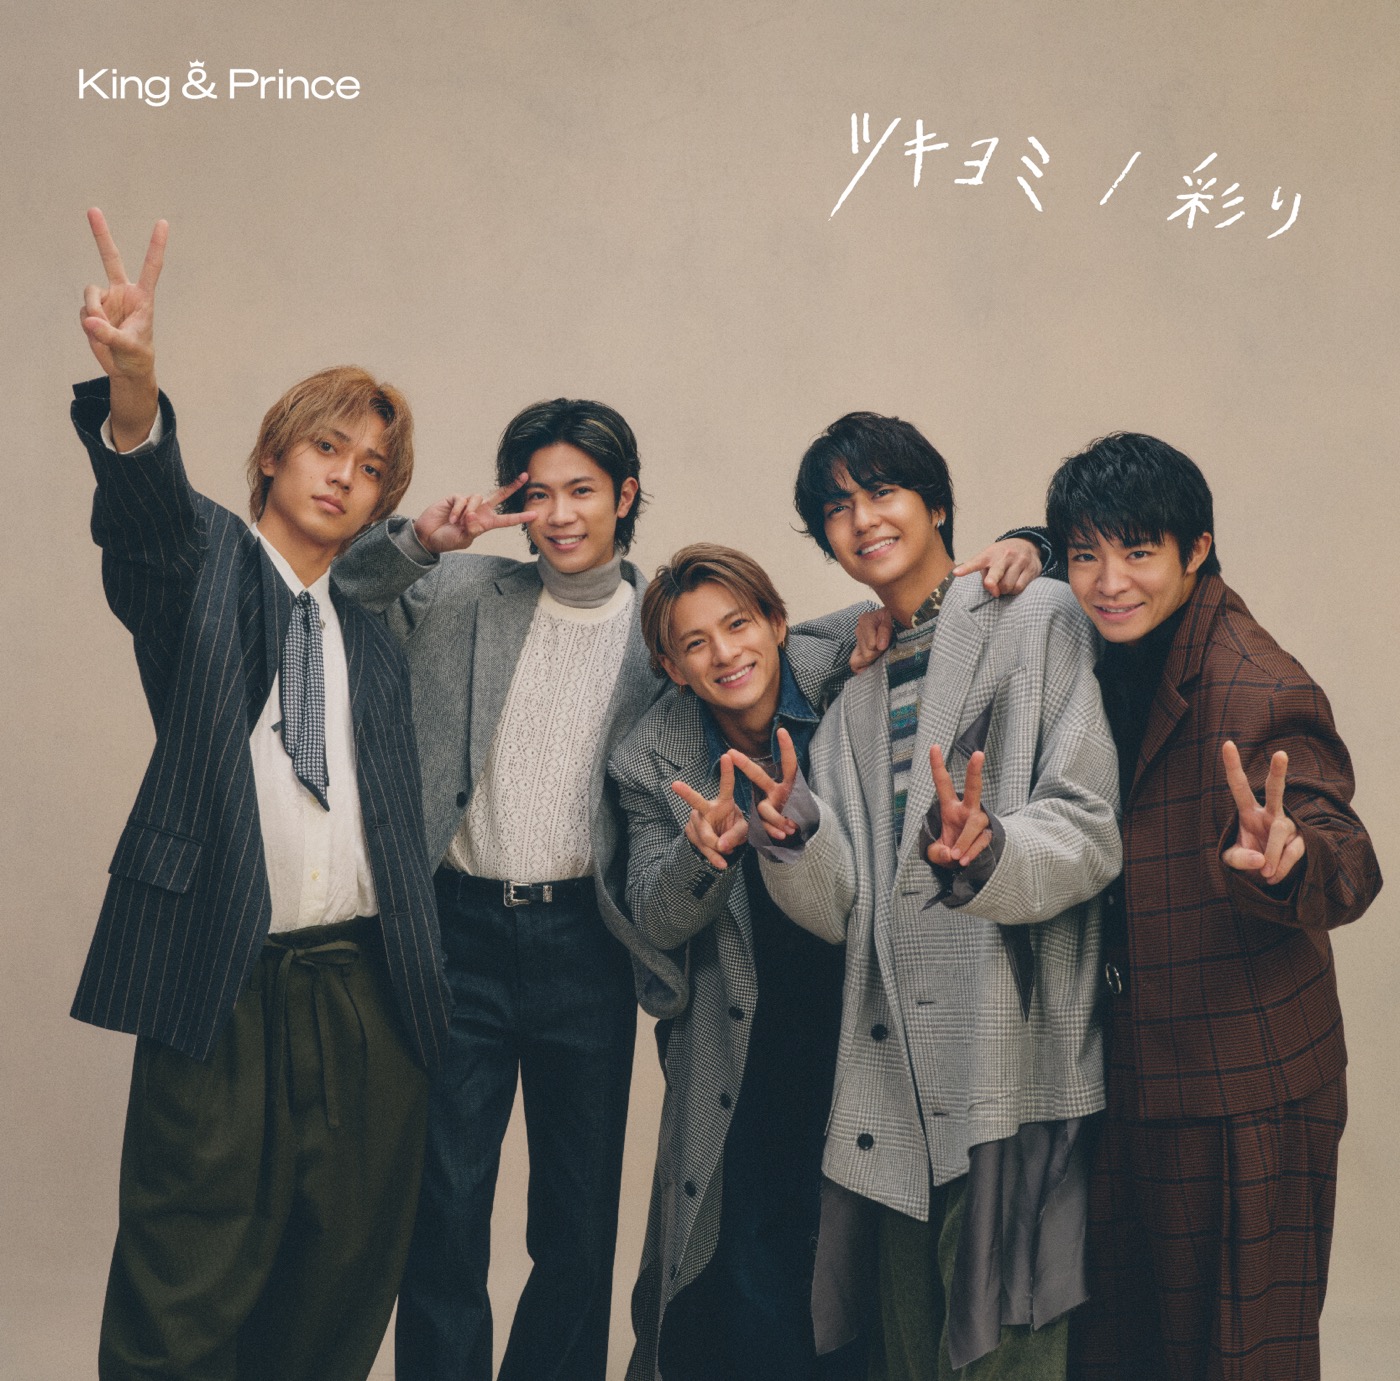 King & Prince、11thシングル「ツキヨミ / 彩り」のジャケット写真を公開 – THE FIRST TIMES